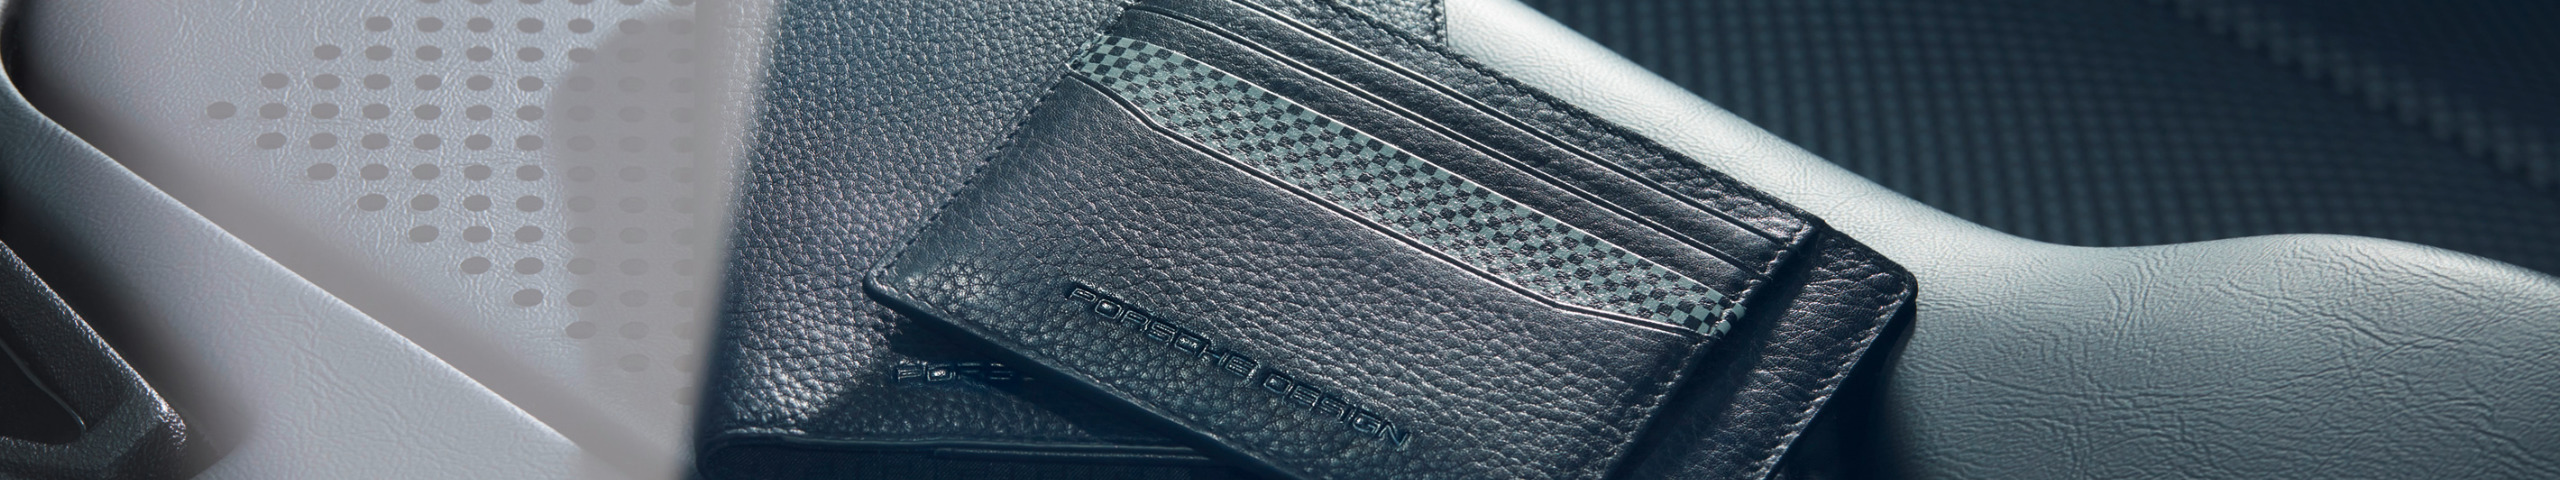 A Porsche Lifestyle wallet.